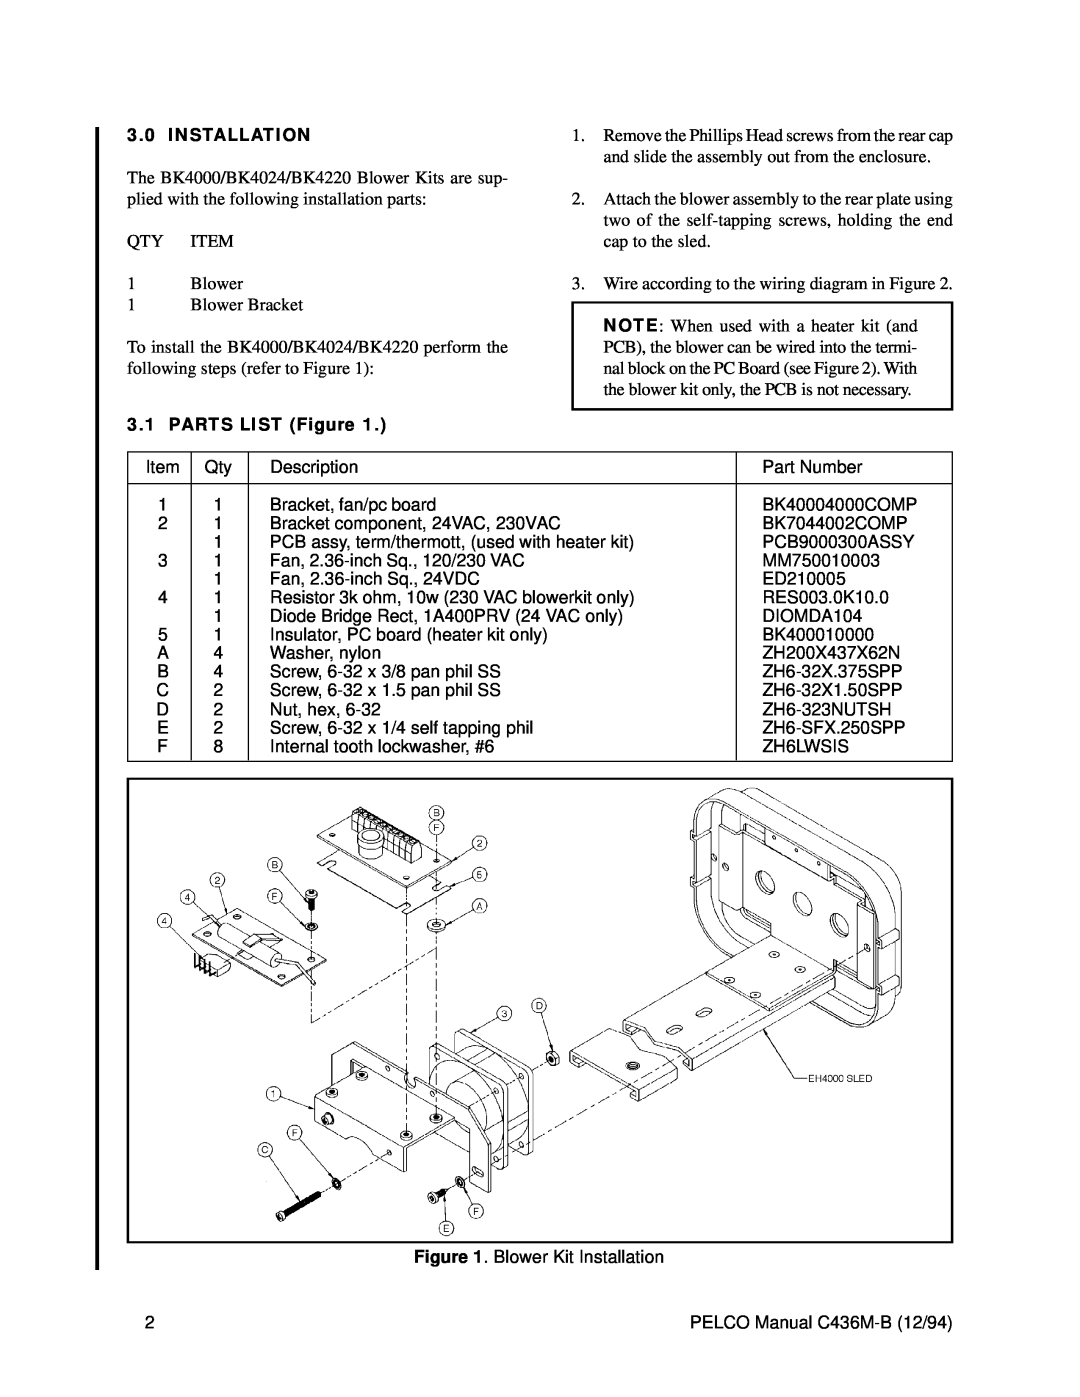 Pelco BK4220, BK4024 operation manual Installation, PARTS LIST Figure 